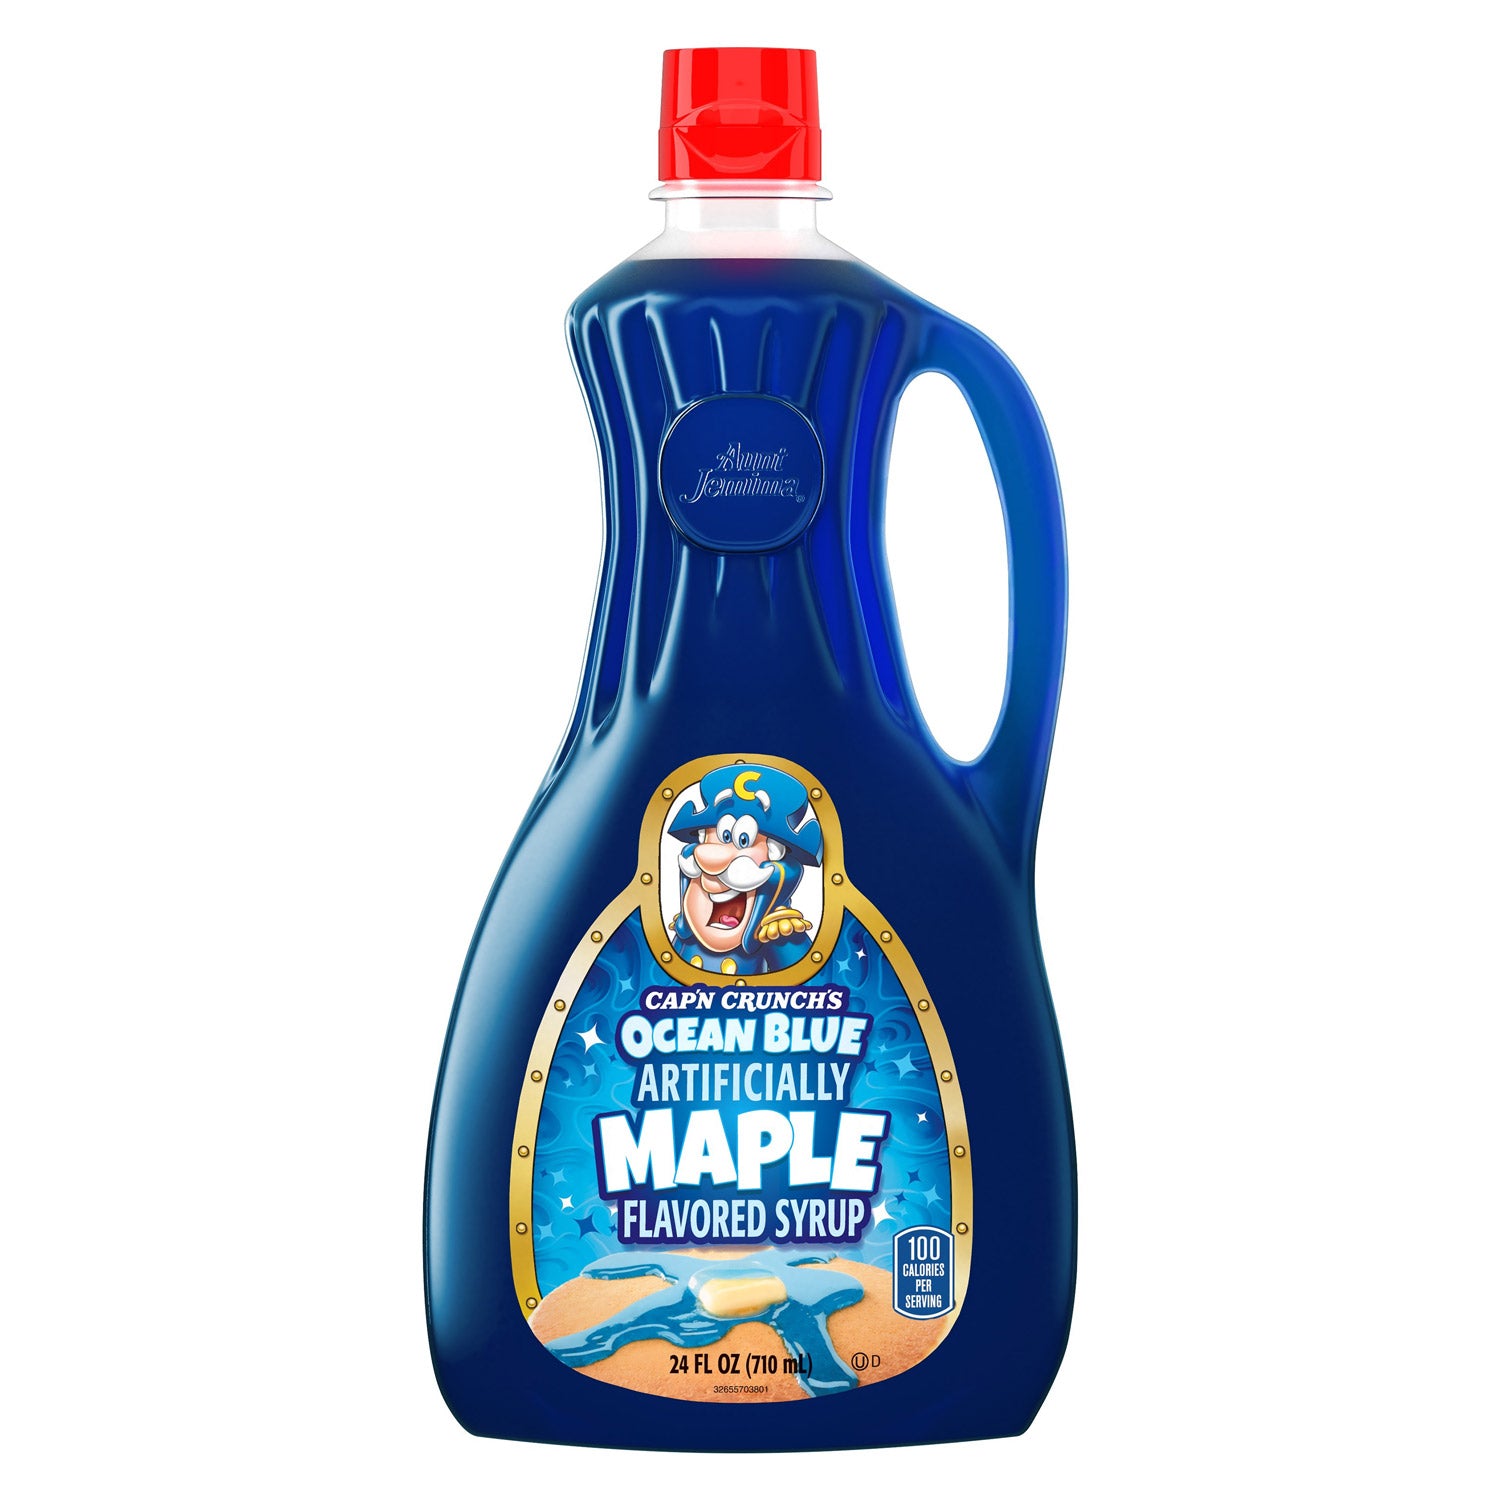 Cap'n Crunch's Ocean Blue Flavored Syrup